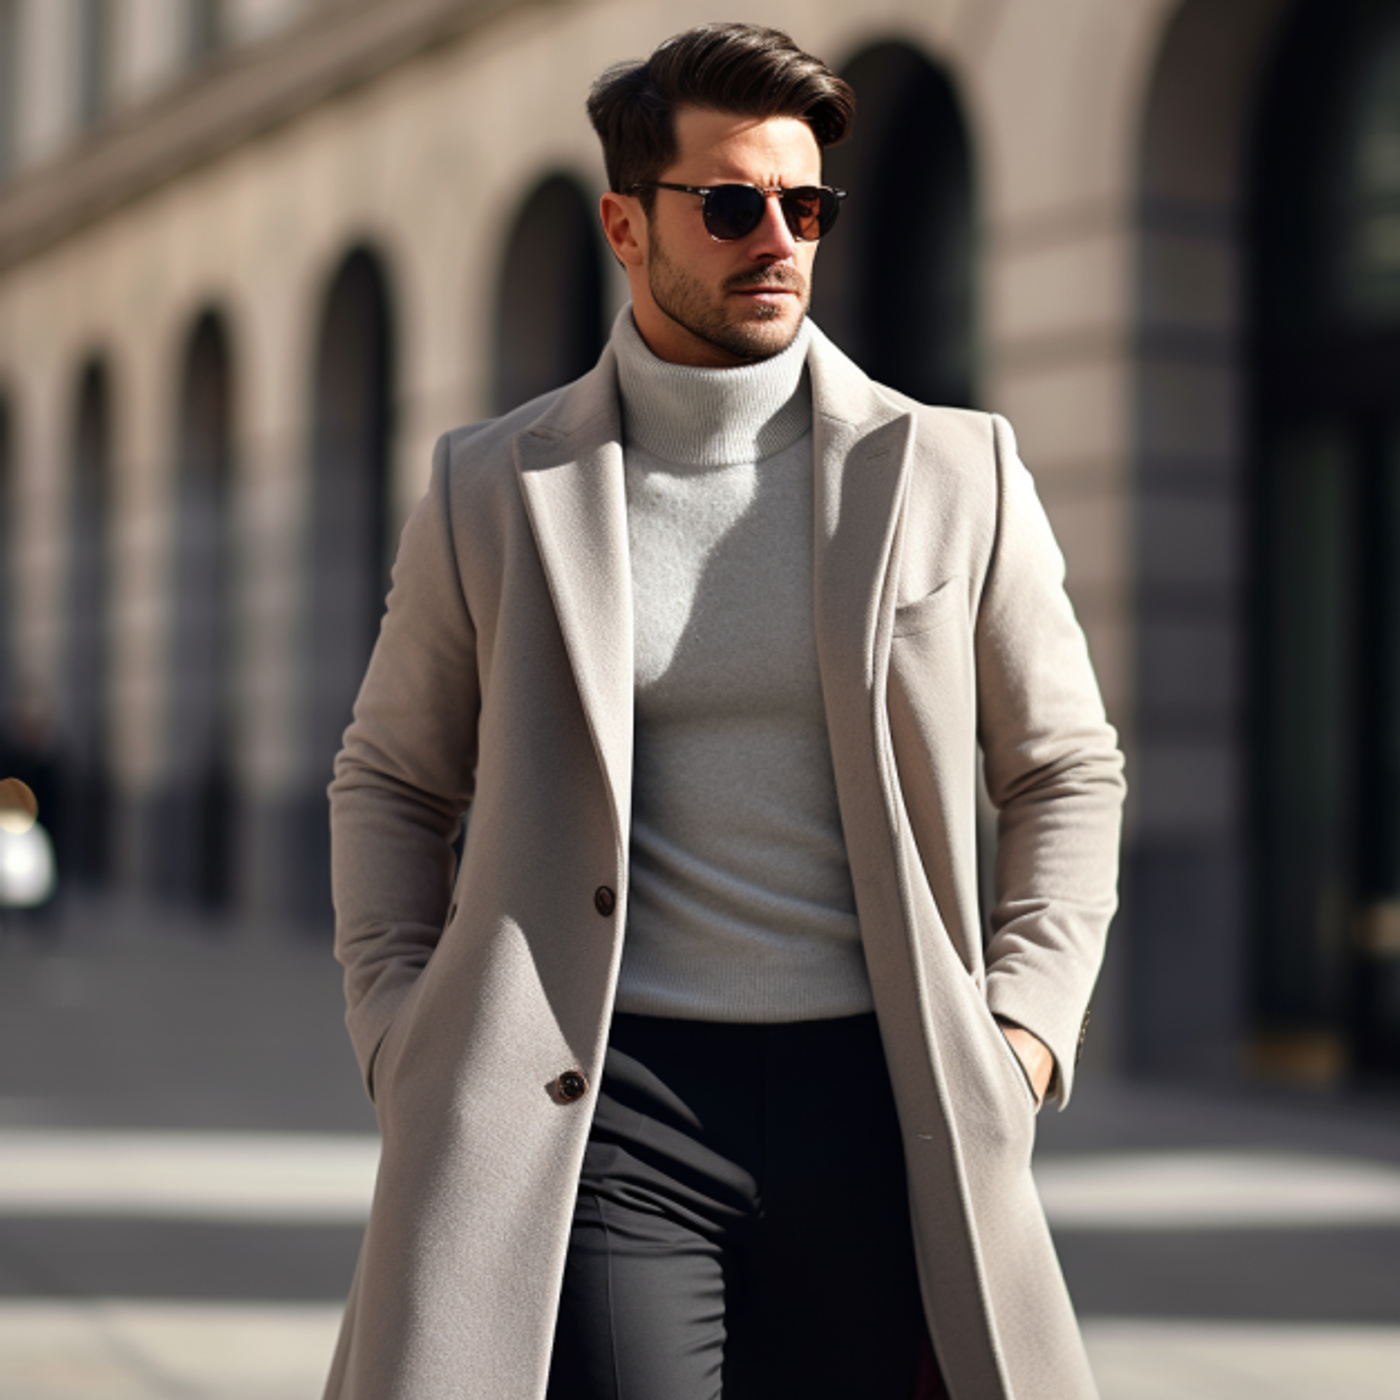 20 Types of Men's Coats - Hockerty